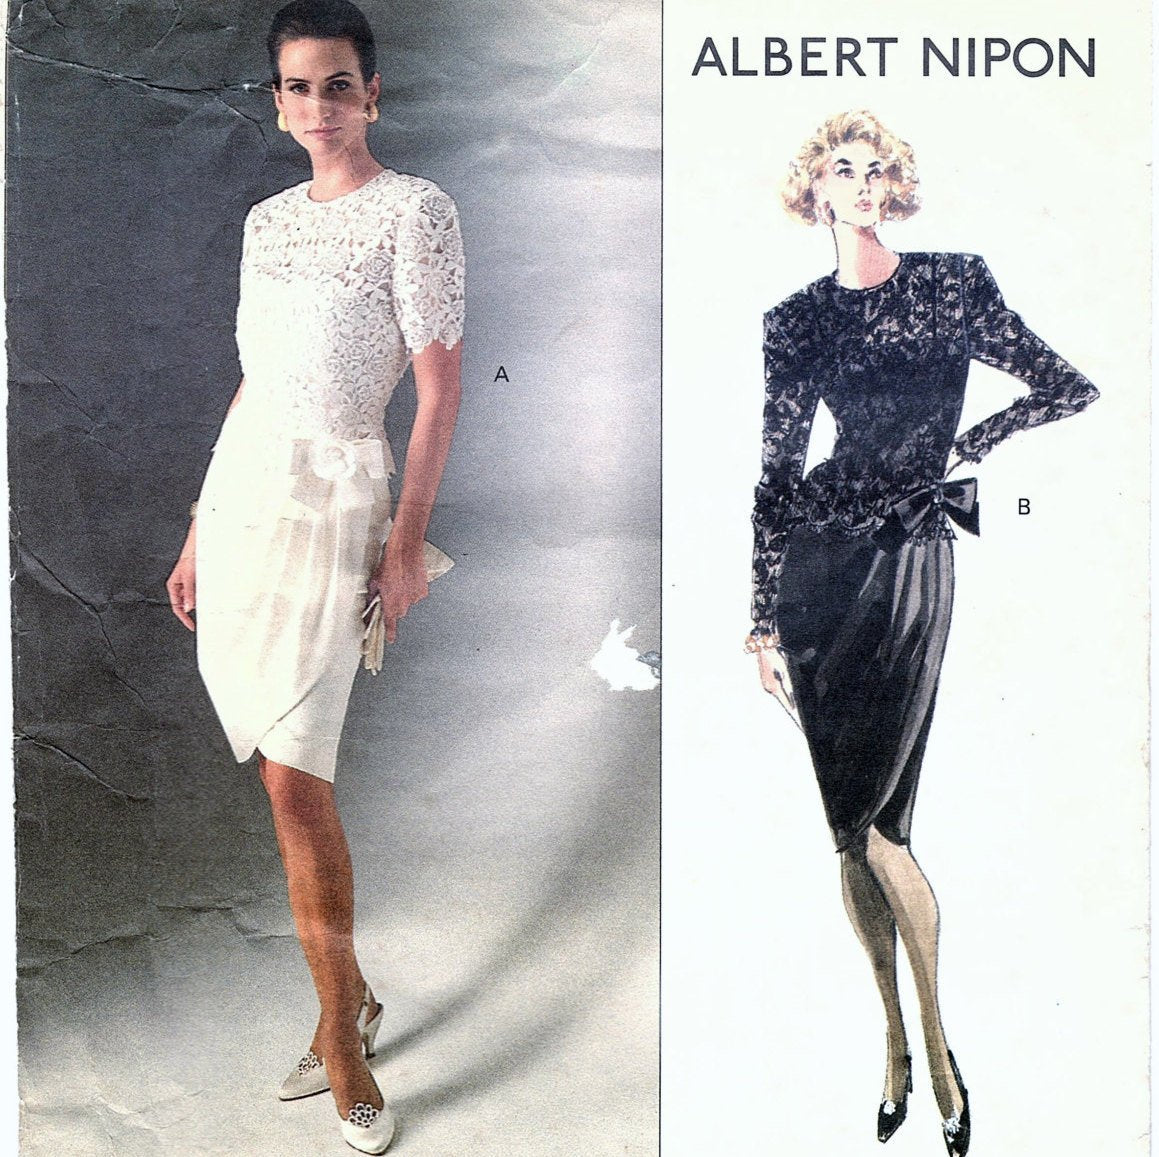 Vogue 2492 Pattern Vintage Misses Dress and Top